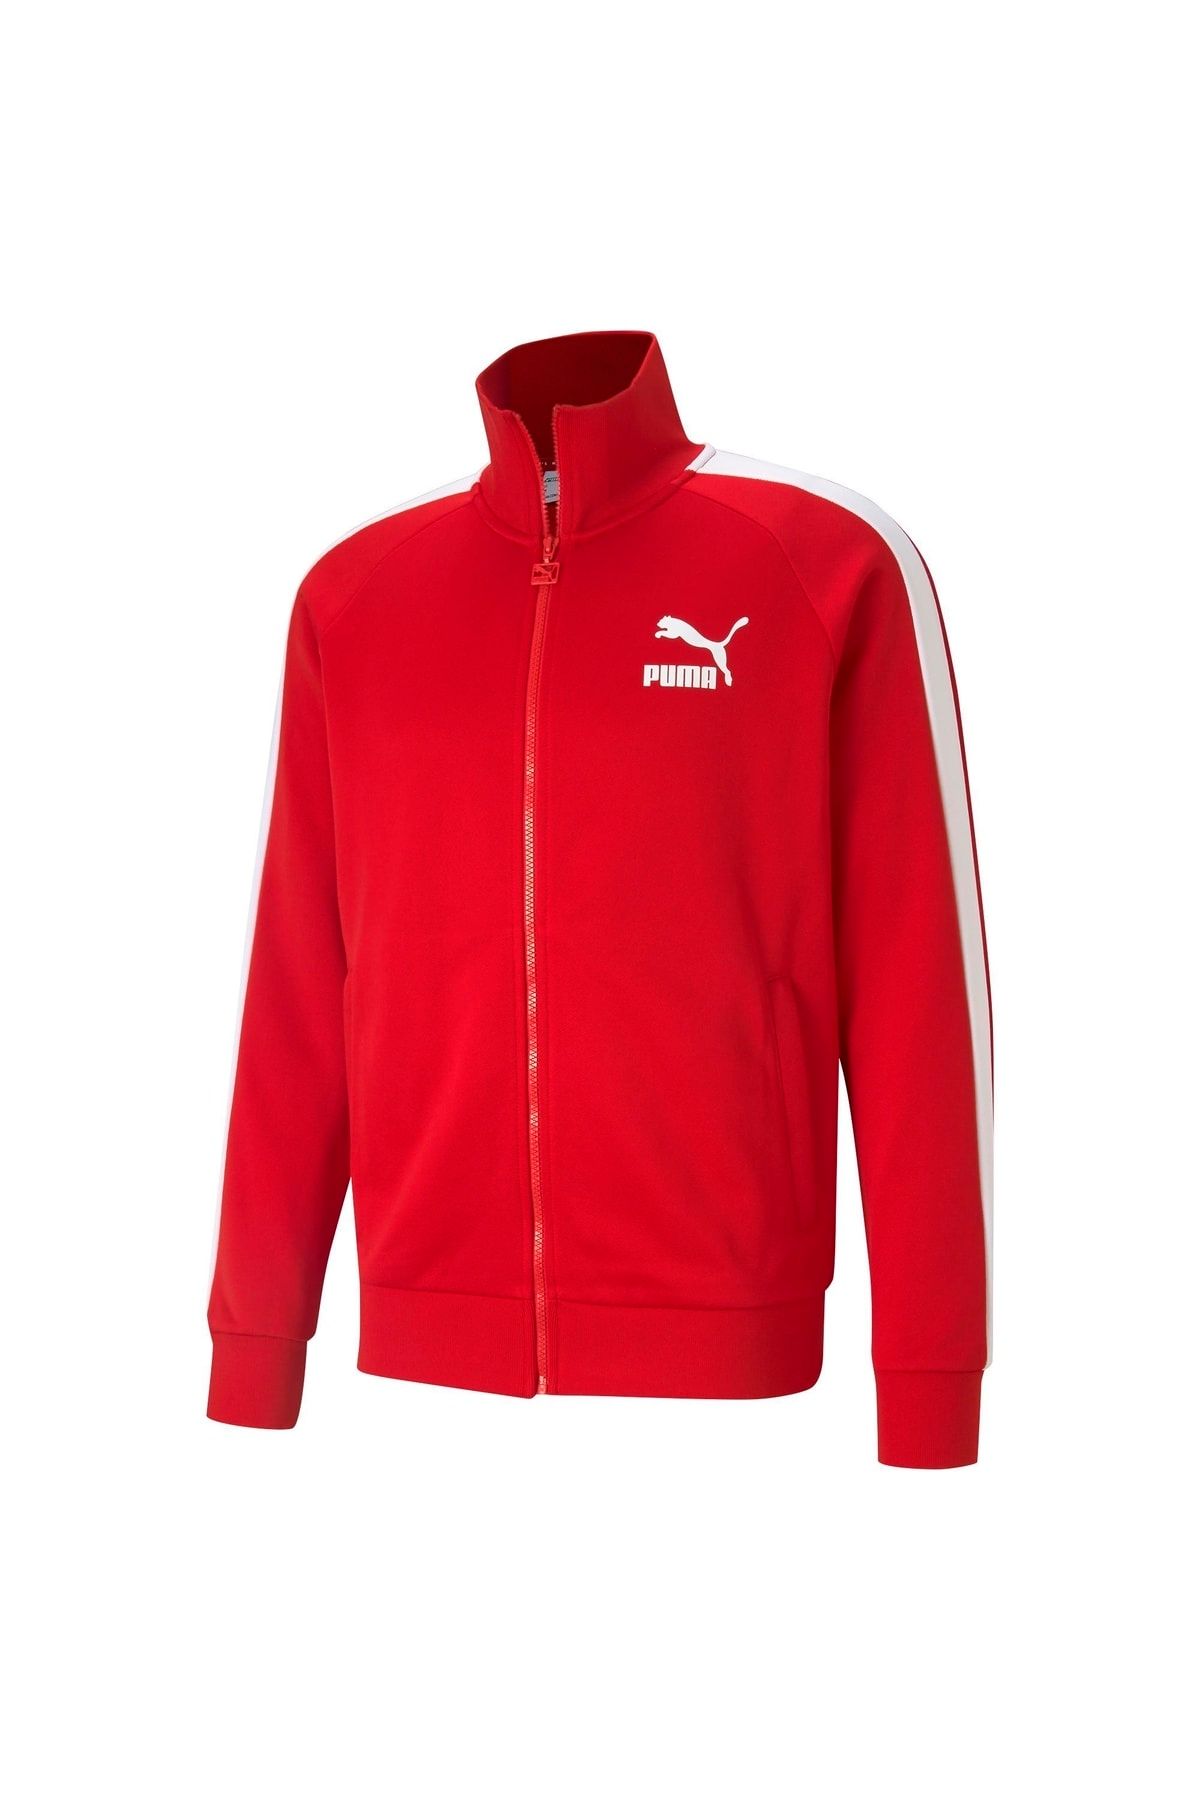 Puma Iconic T7 Track Jacket Pt Kırmızı Erkek Fermuarlı Sweatshirt